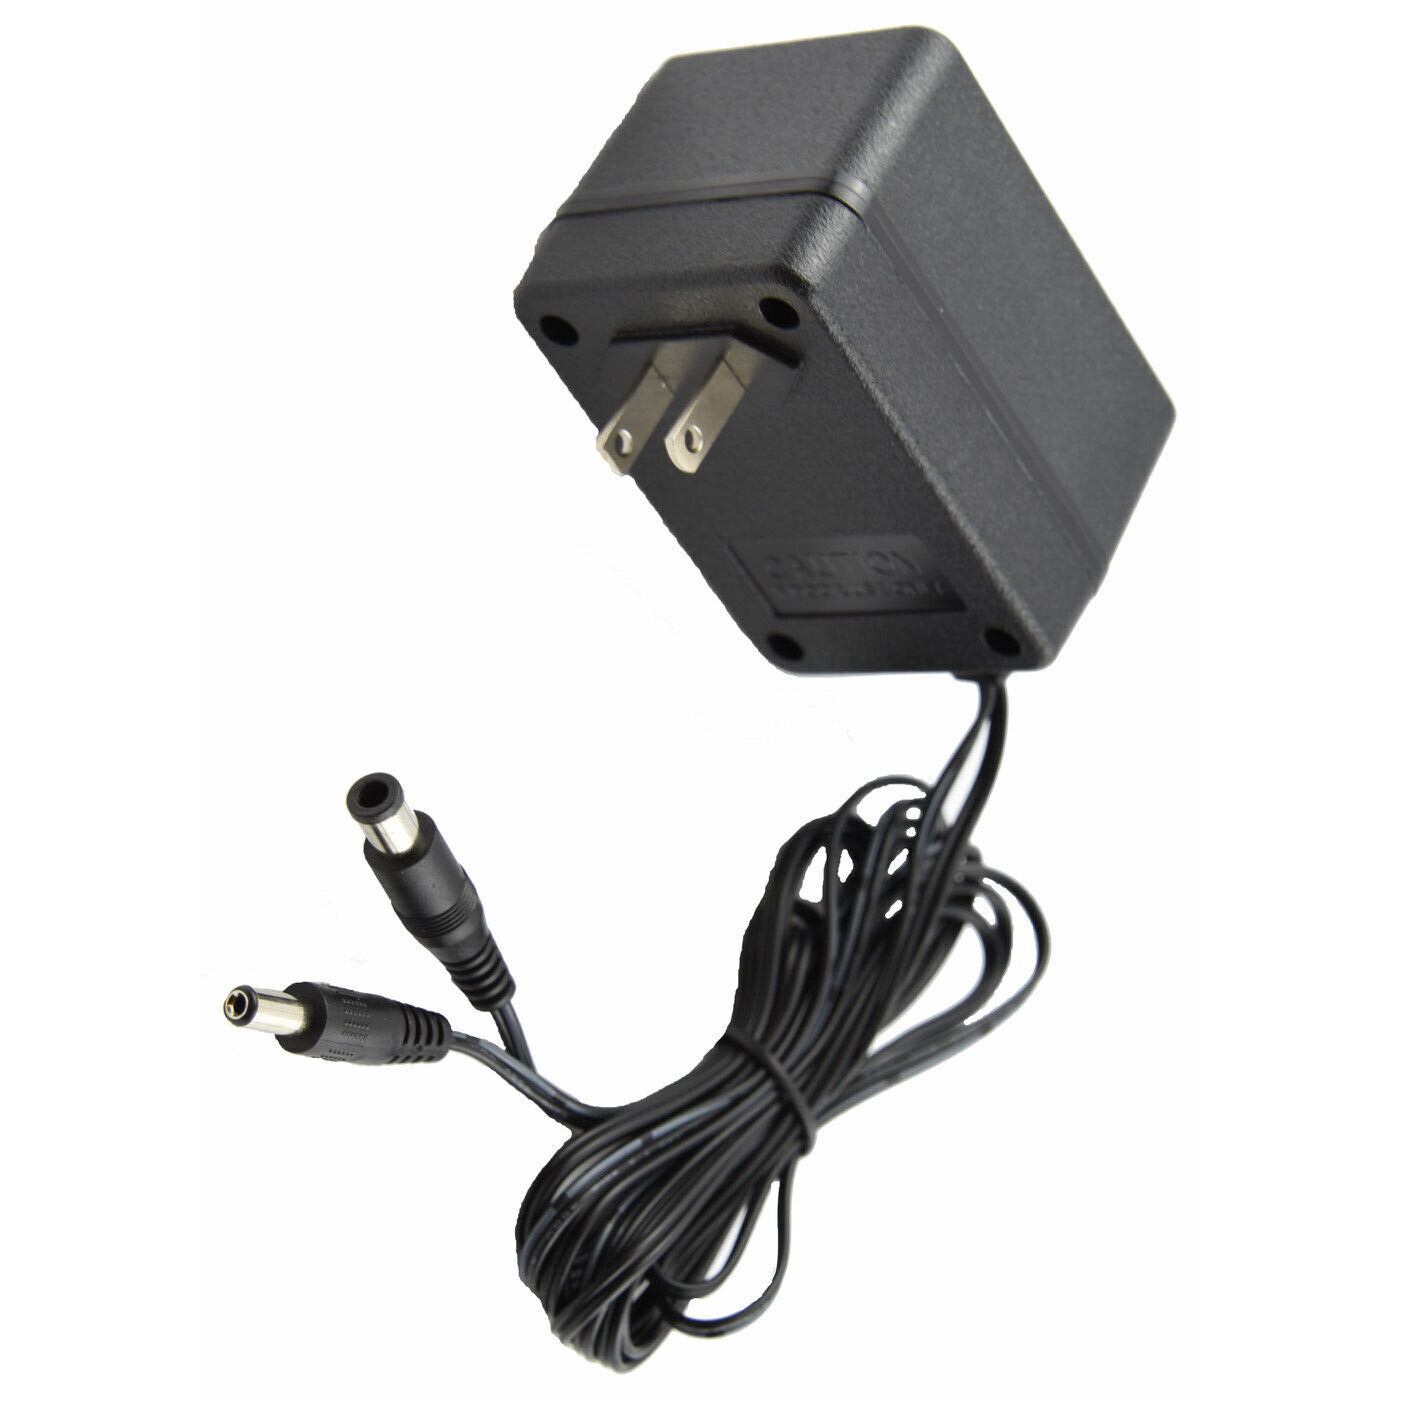 Audio AV RAC Cable Cord Adapter+ AC Power Supply For SEGA Genesis Model 1 MK-160 Brand Unbranded Type Power Adapter Pla